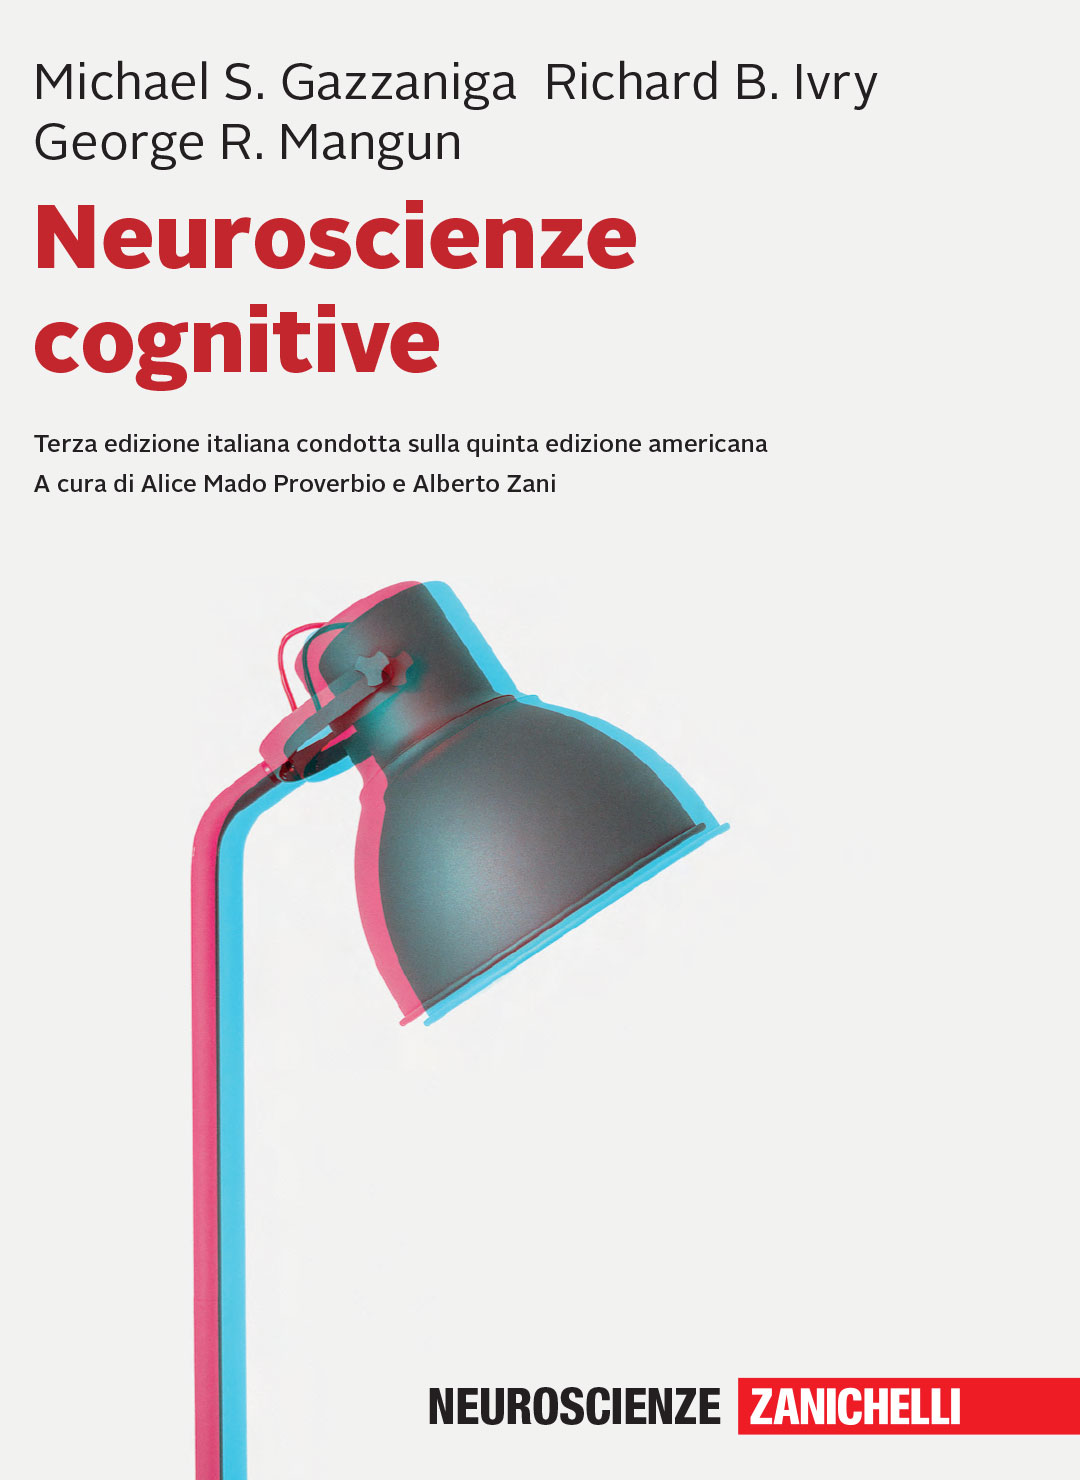 Neuroscienze-cognitive-epitesto